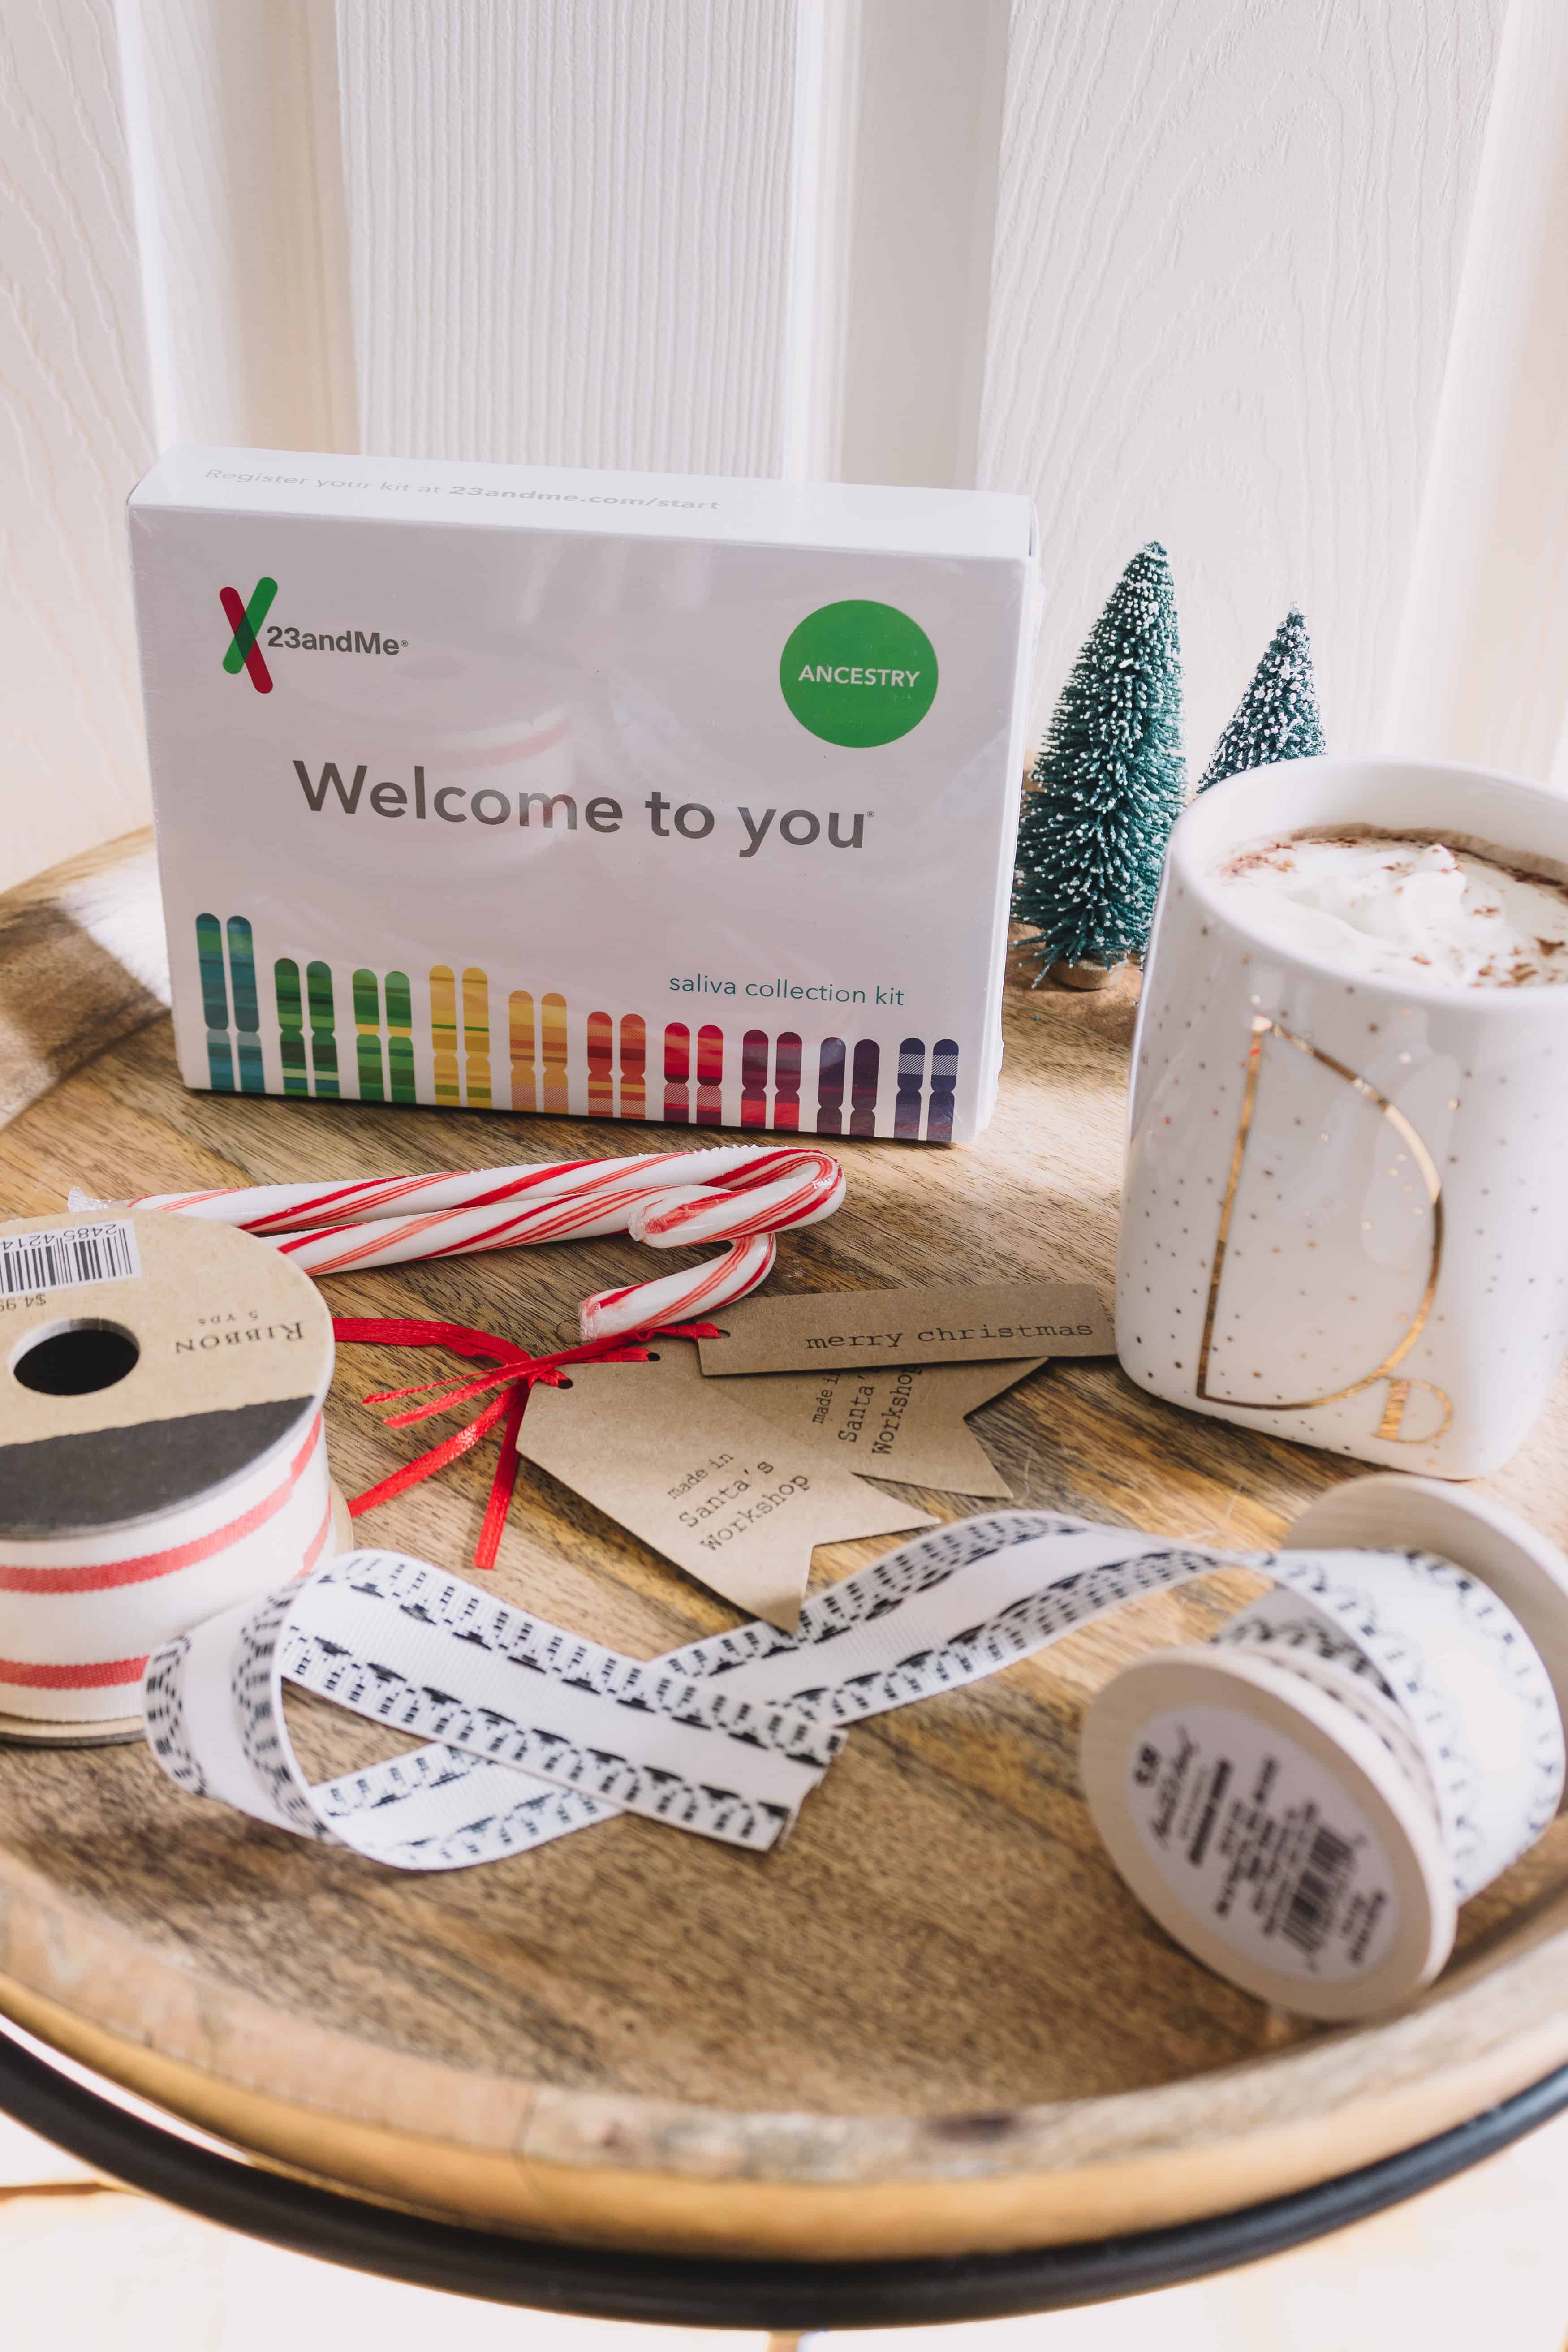 Holiday Gift Idea: 23andMe Ancestry Kit